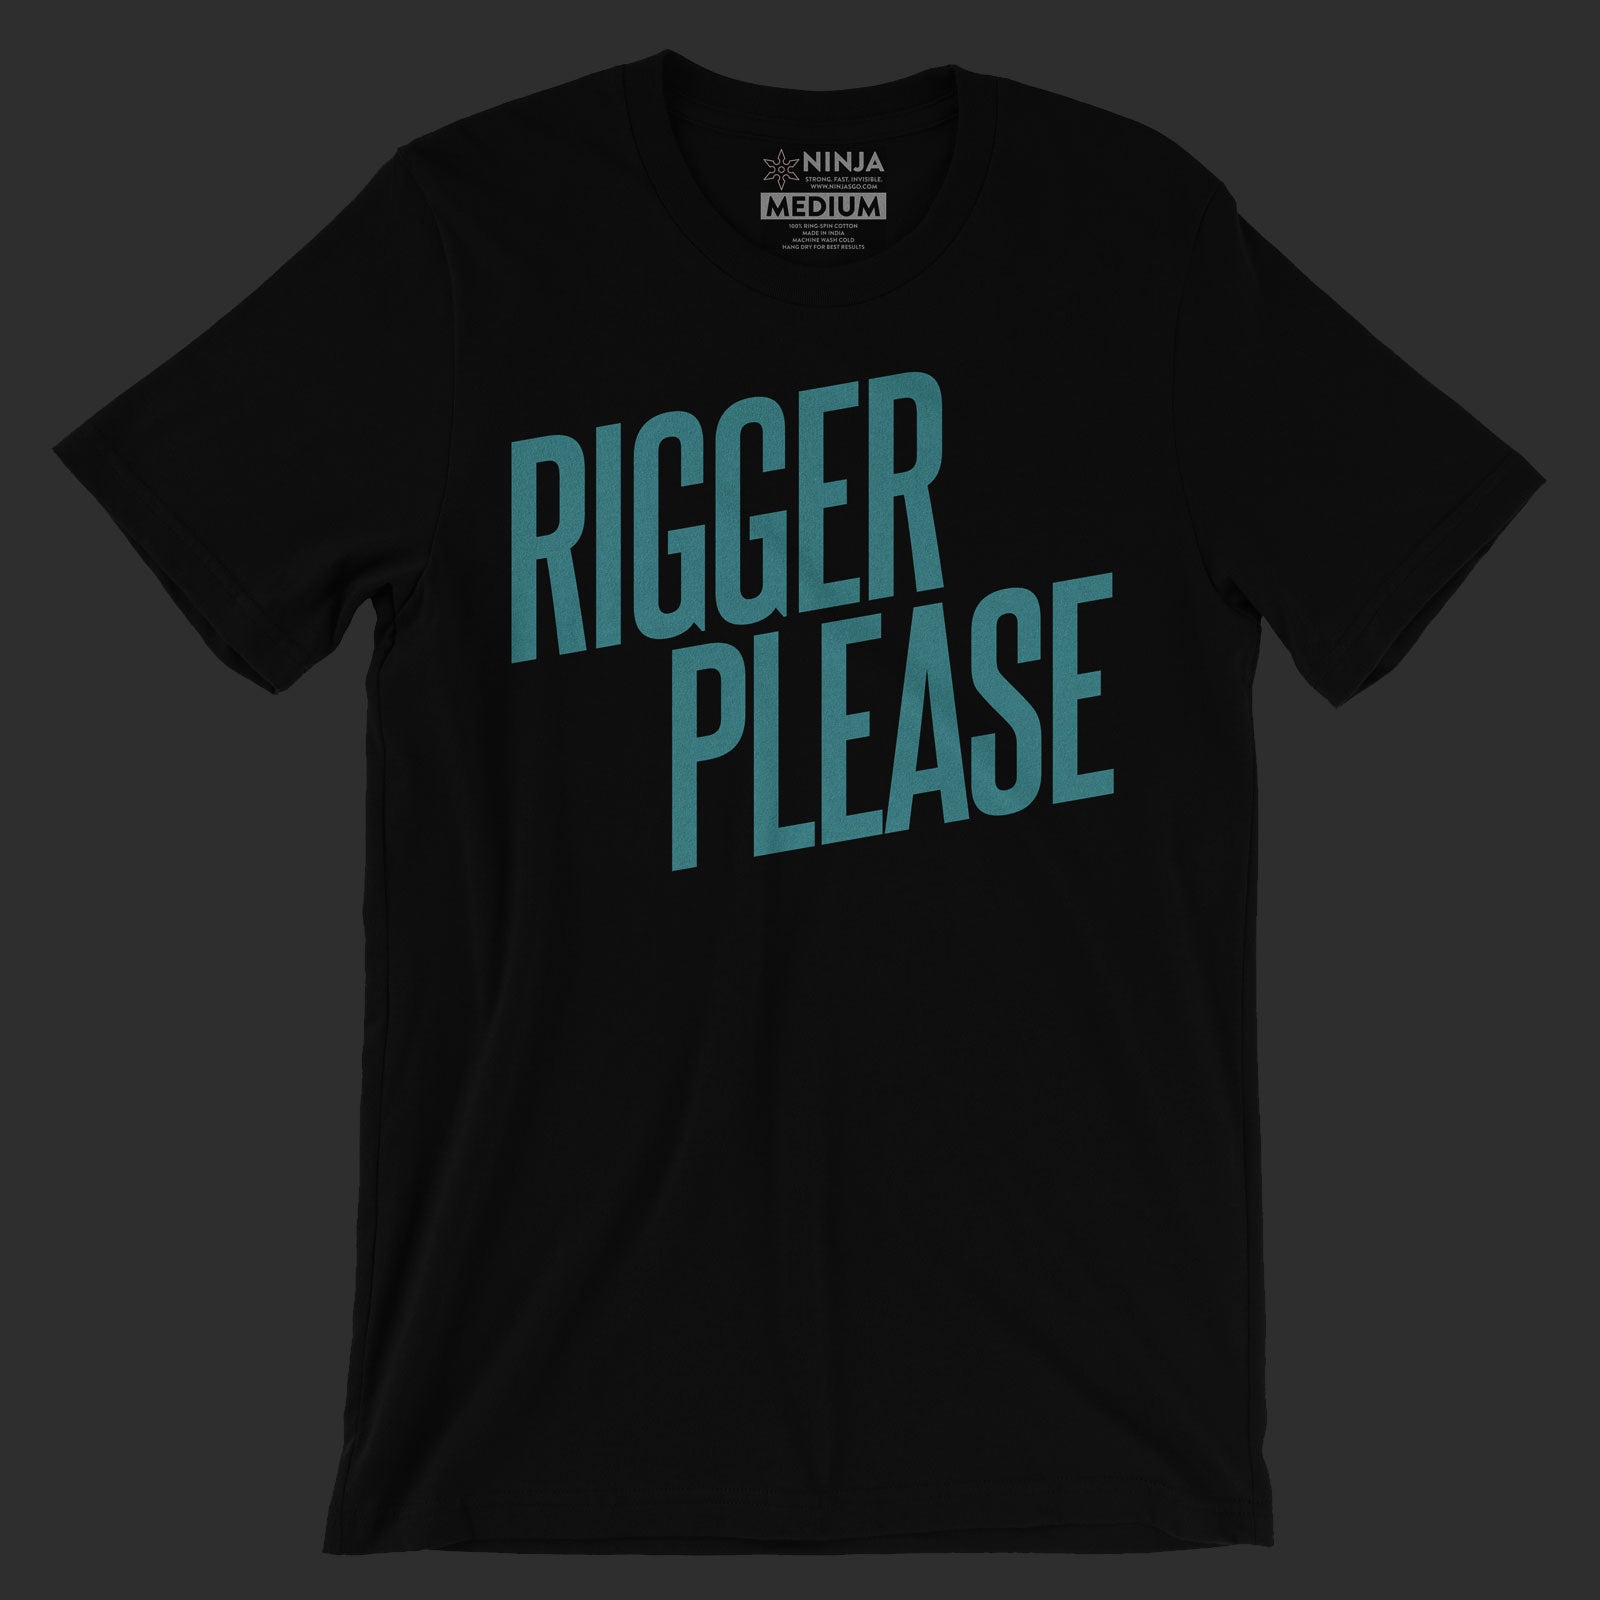 Rigger Please